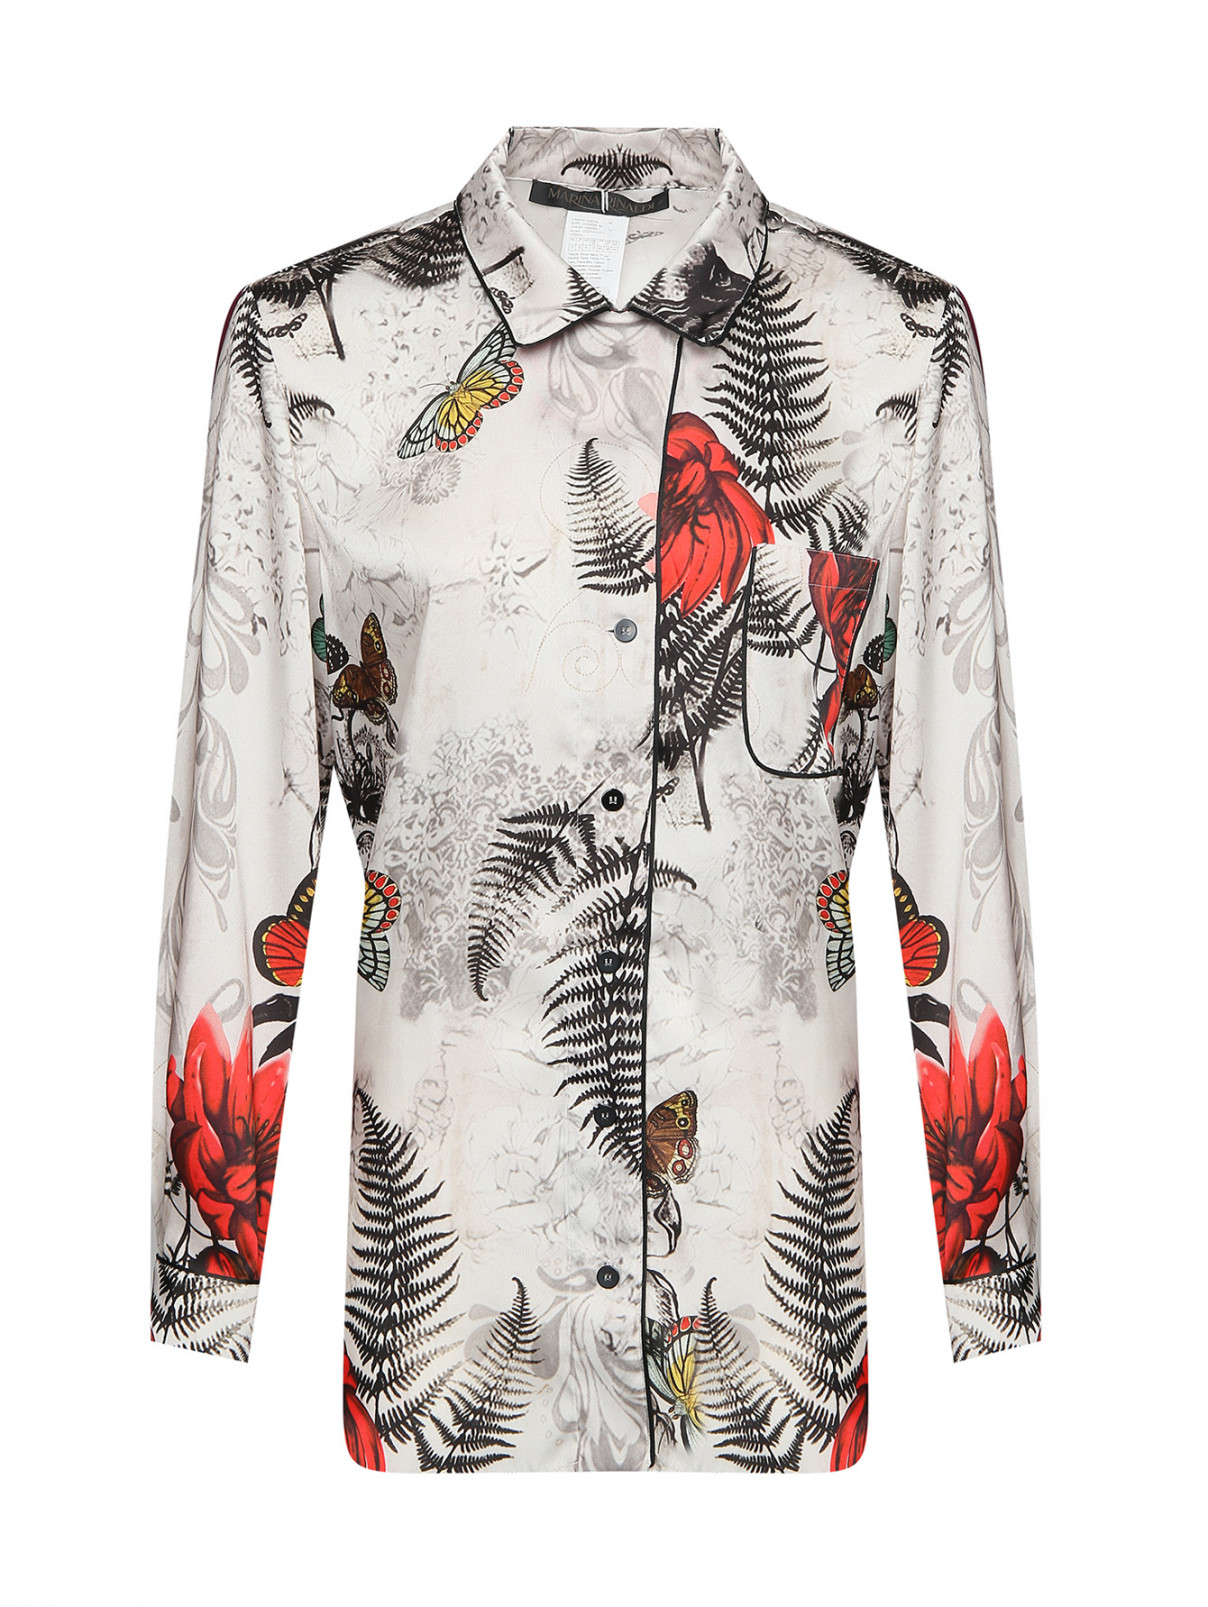 Блуза с узором на пуговицах Marina Rinaldi  –  Общий вид  – Цвет:  Узор